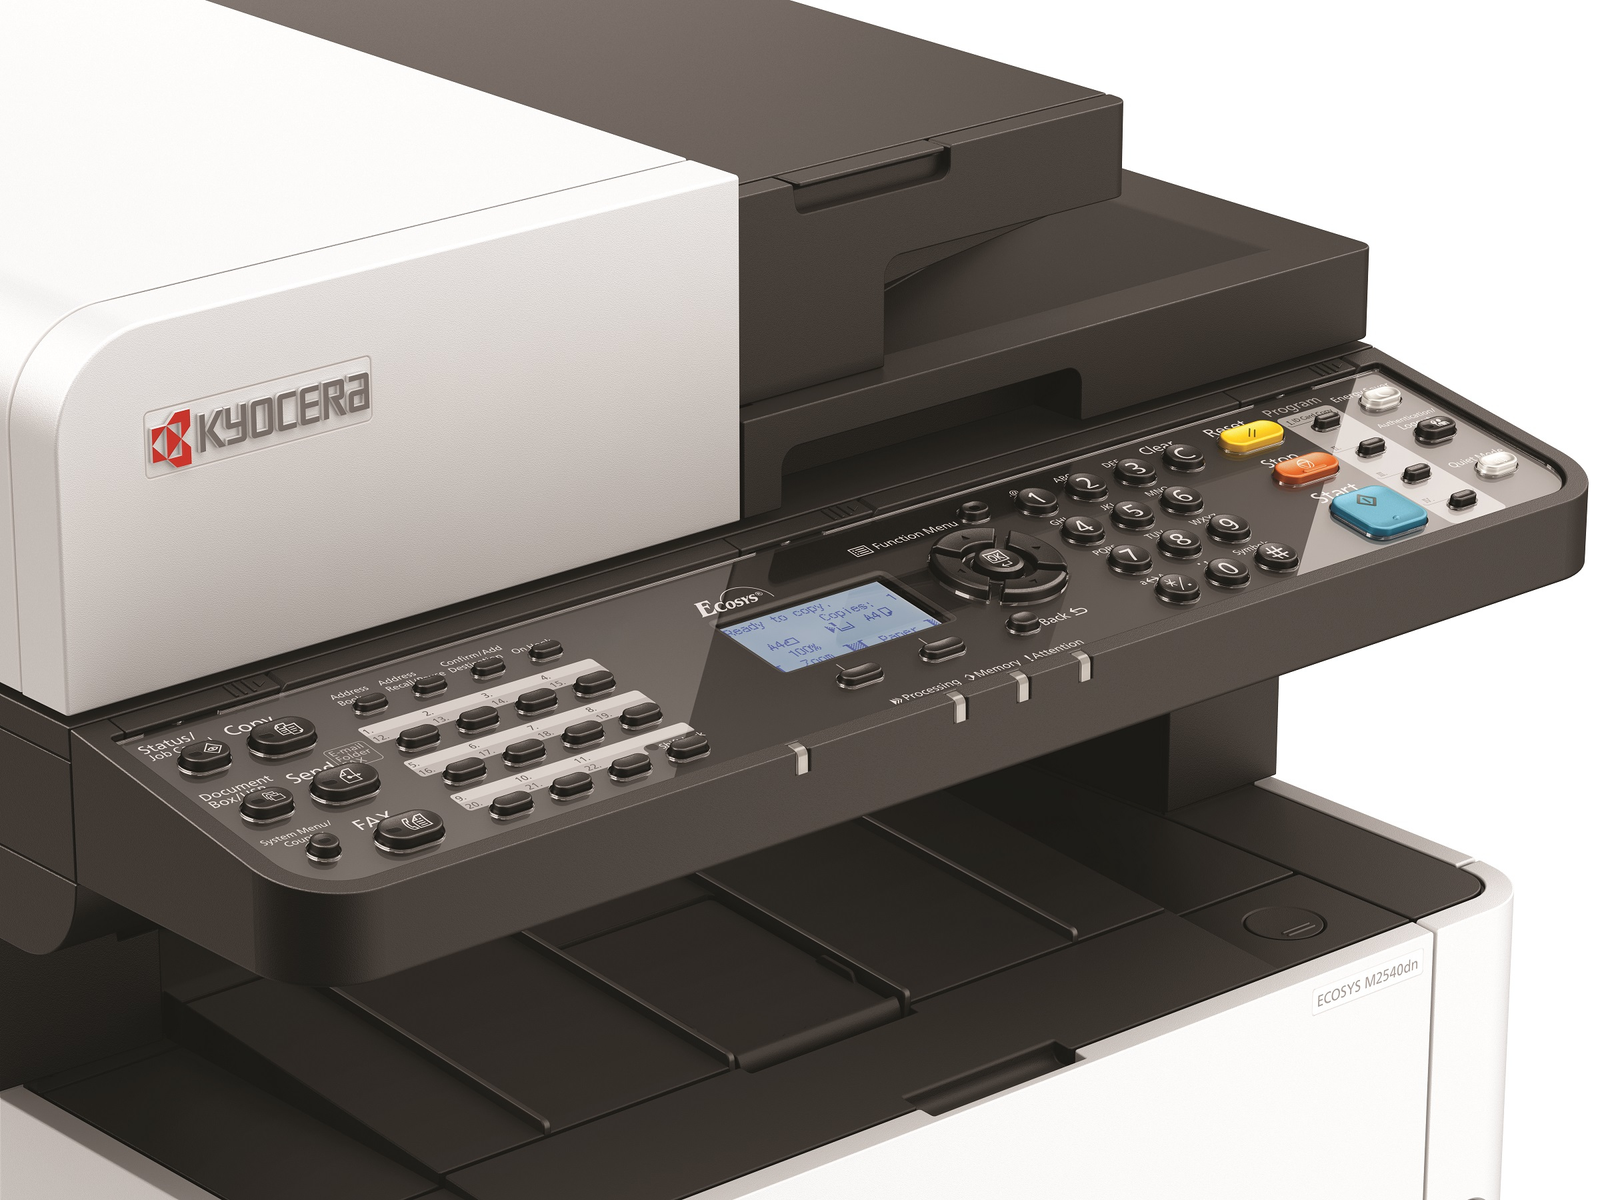 KYOCERA Klimaschutz-System ECOSYS M2540dn Kopierer, printer_multifunction Multifunktionsgeräte Drucker und s/w Netzwerkfähig Drucker, Laser-Multifunktionsgerät Laser (A4, 4in1